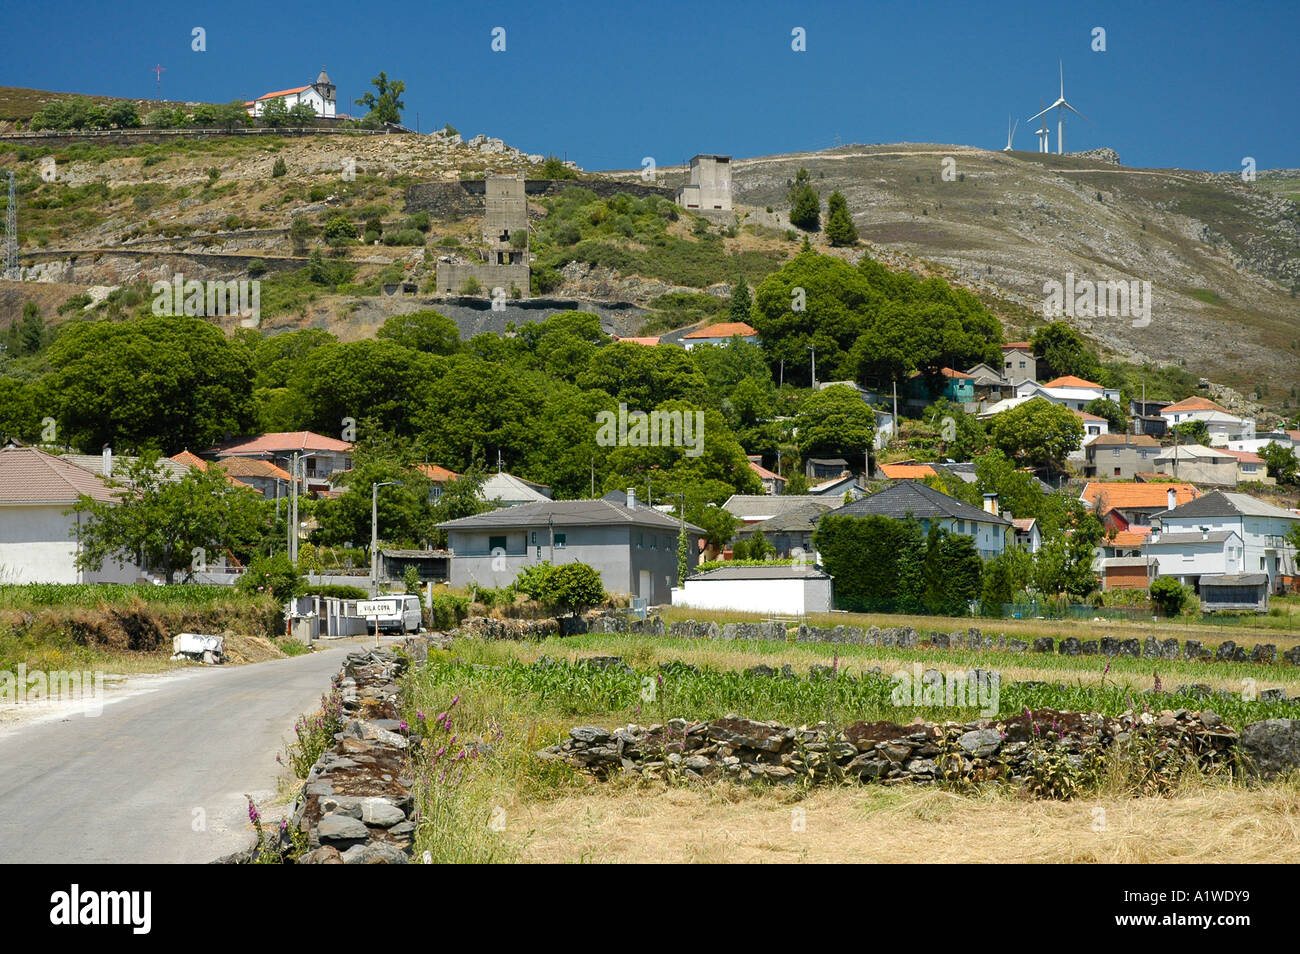 Blick auf Straße, Dorf und Berge, Alvao Naturparks, Portugal, Europa Stockfoto